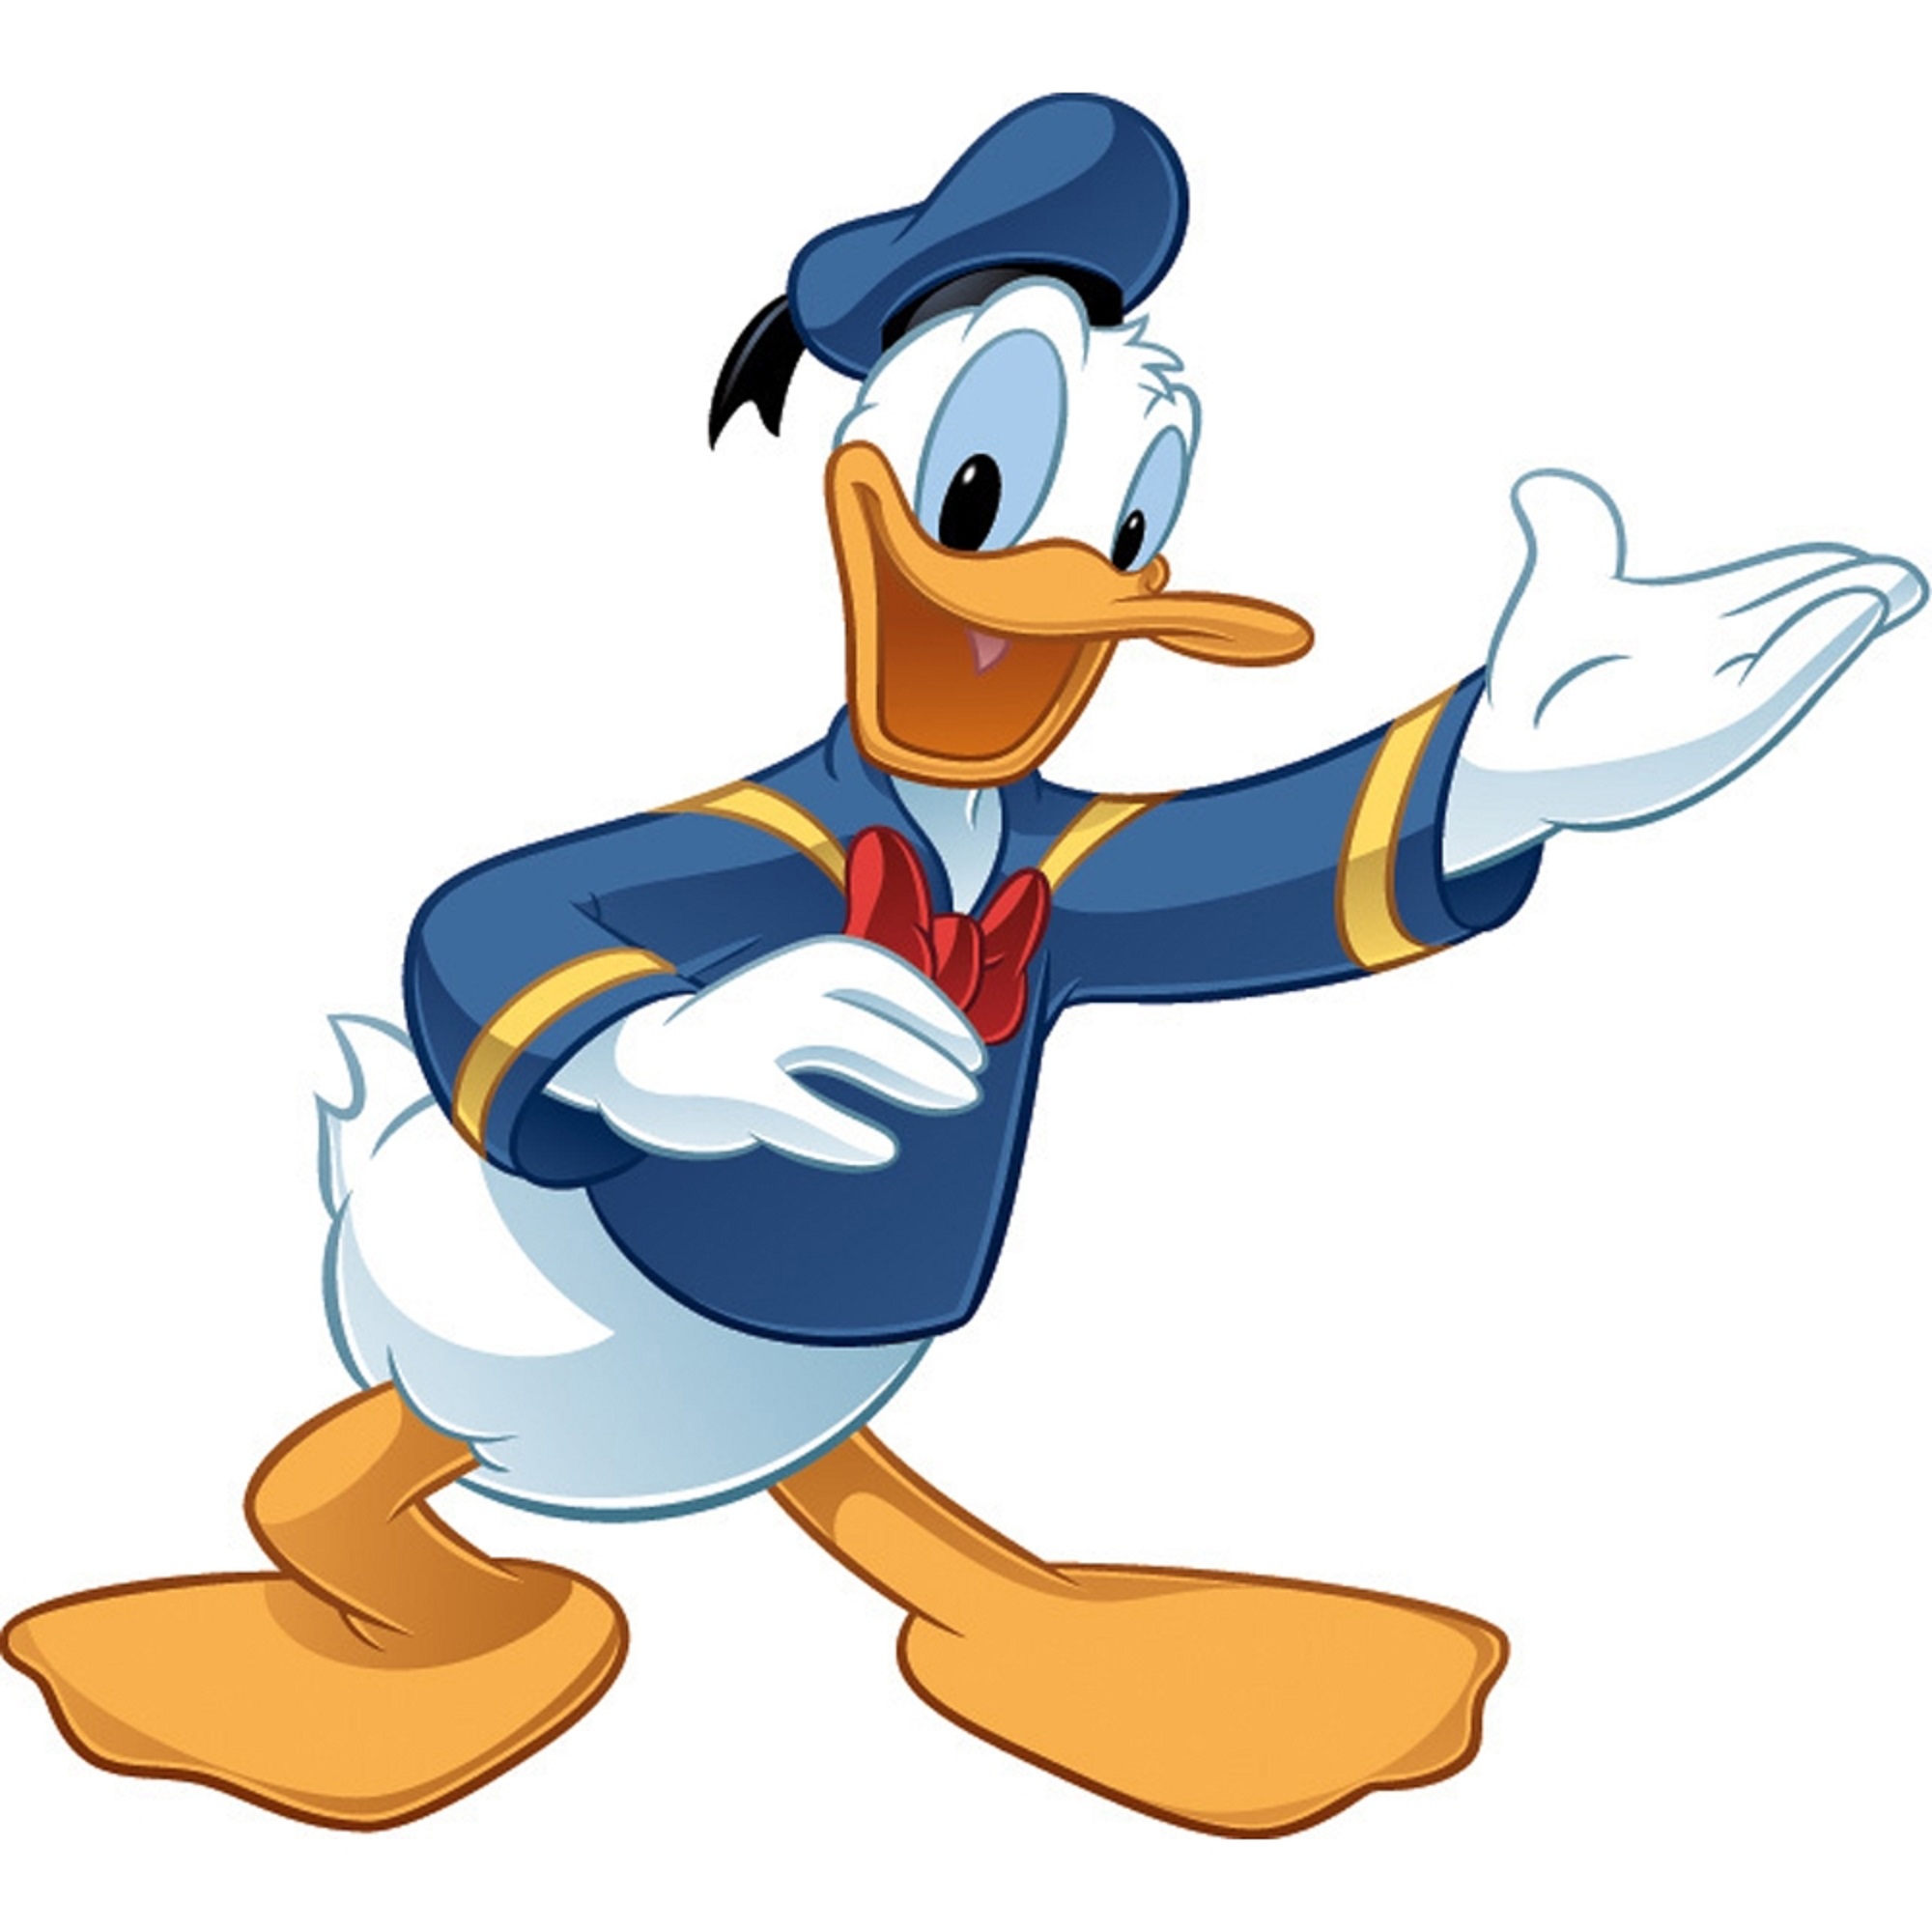 Donald Duck | Fictional Characters Wiki | Fandom